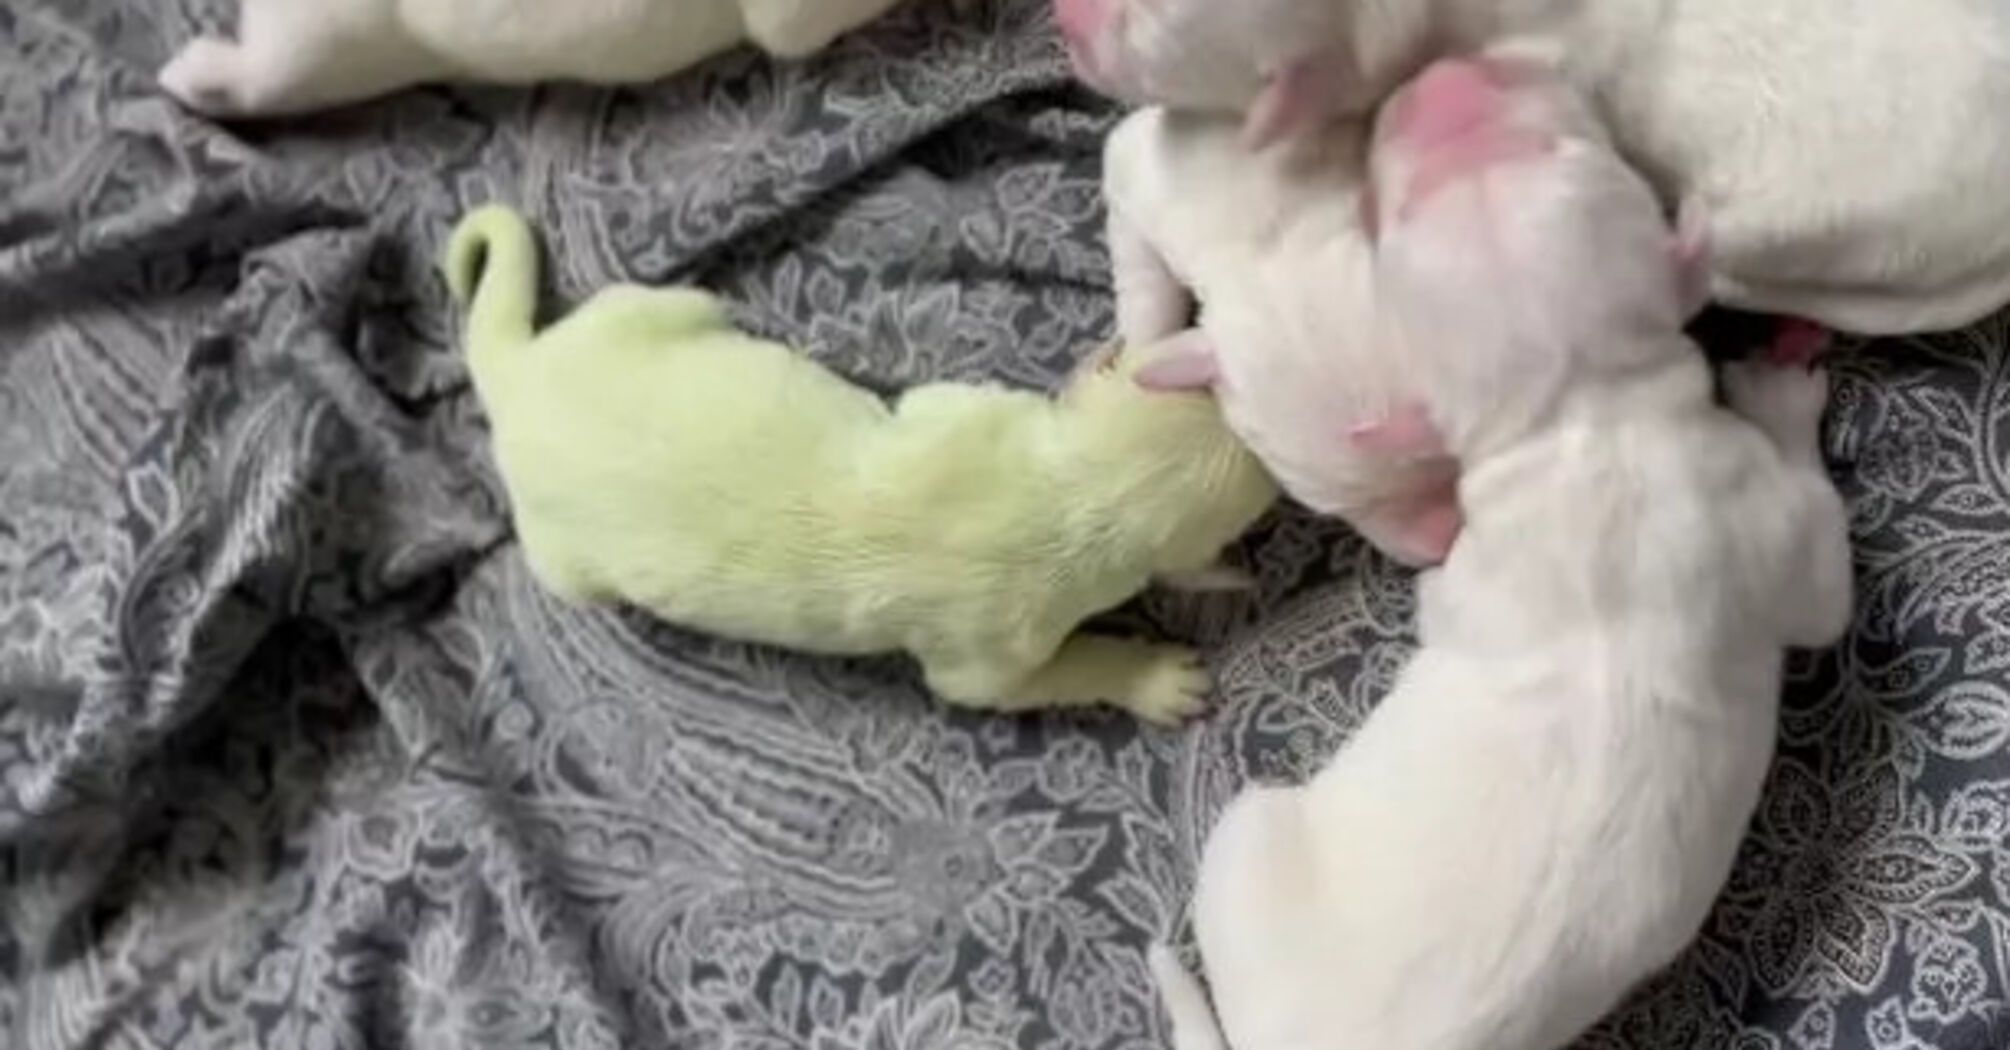 Golden Retriever gives birth to a super rare lime green puppyGolden Retriever gives birth to a super rare lime green puppy